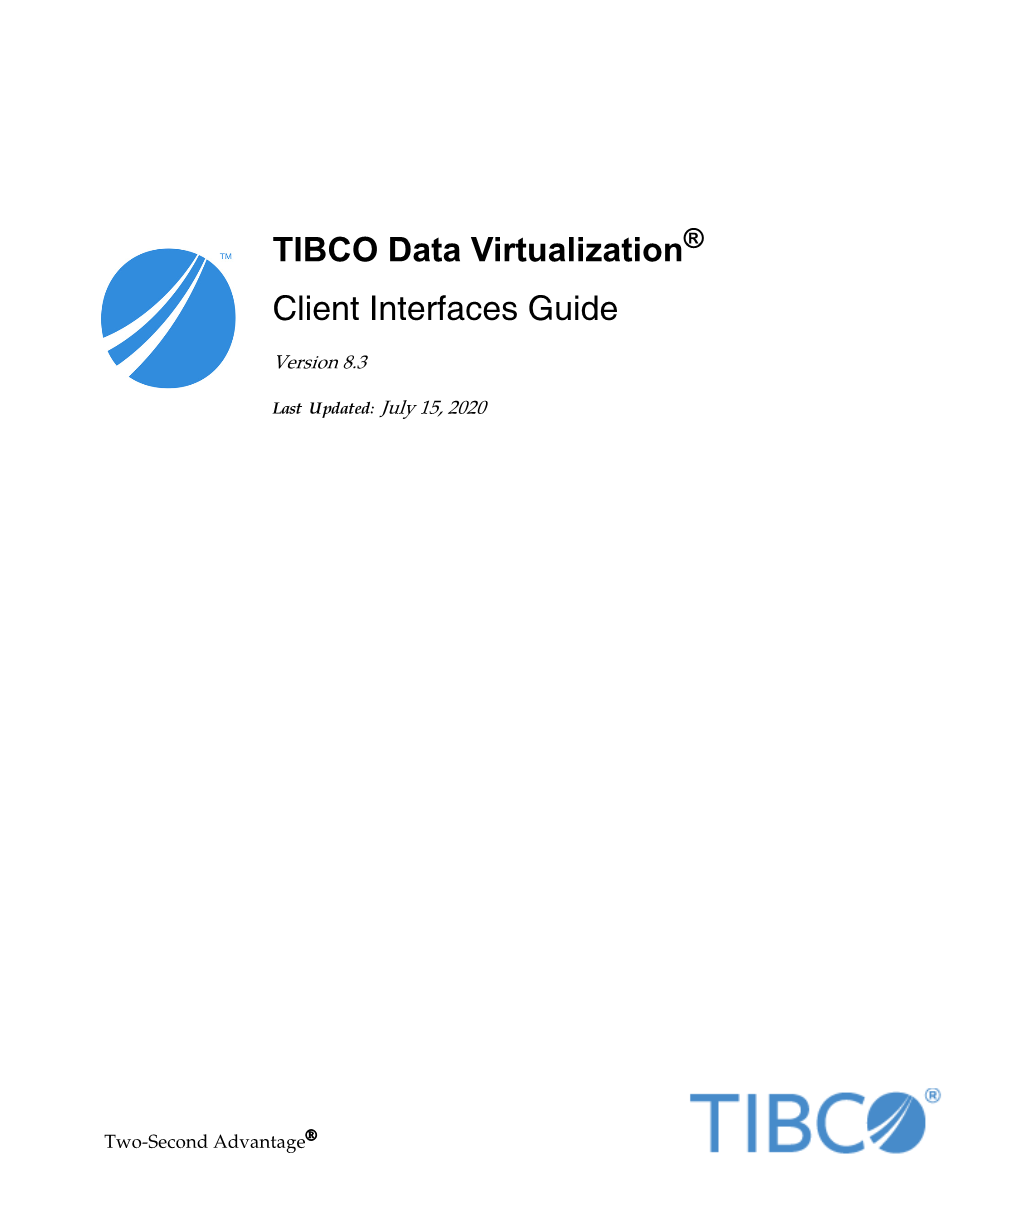 TIBCO Data Virtualization Client Interfaces Guide